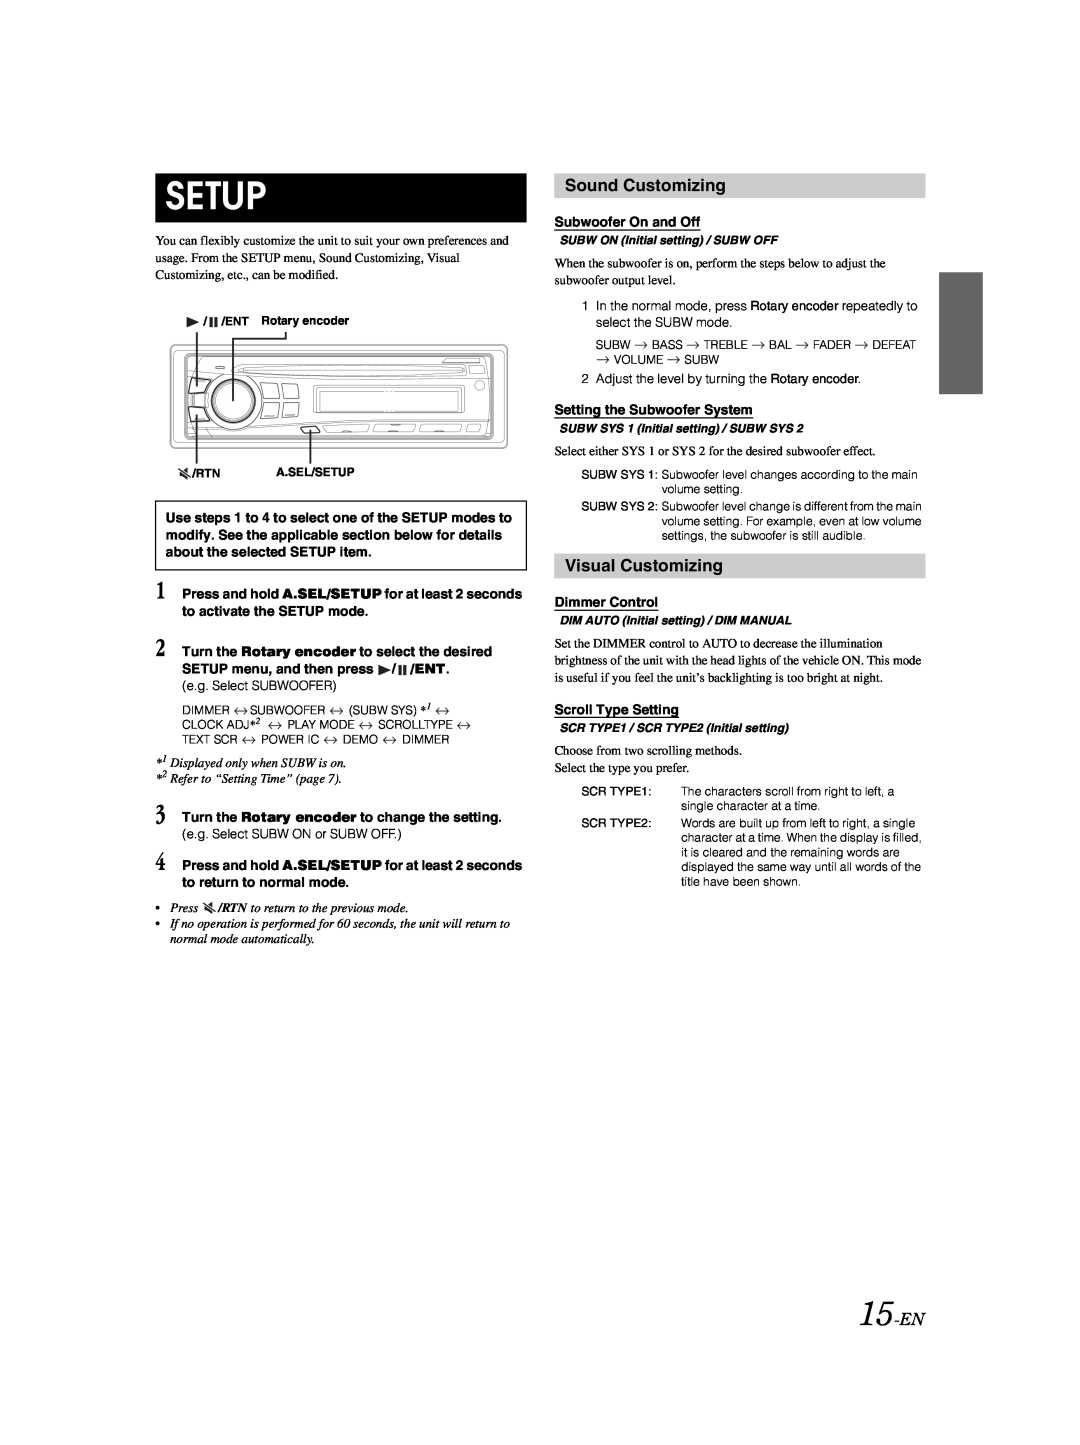 Alpine CDE-9873 owner manual Setup, Sound Customizing, Visual Customizing, 15-EN 